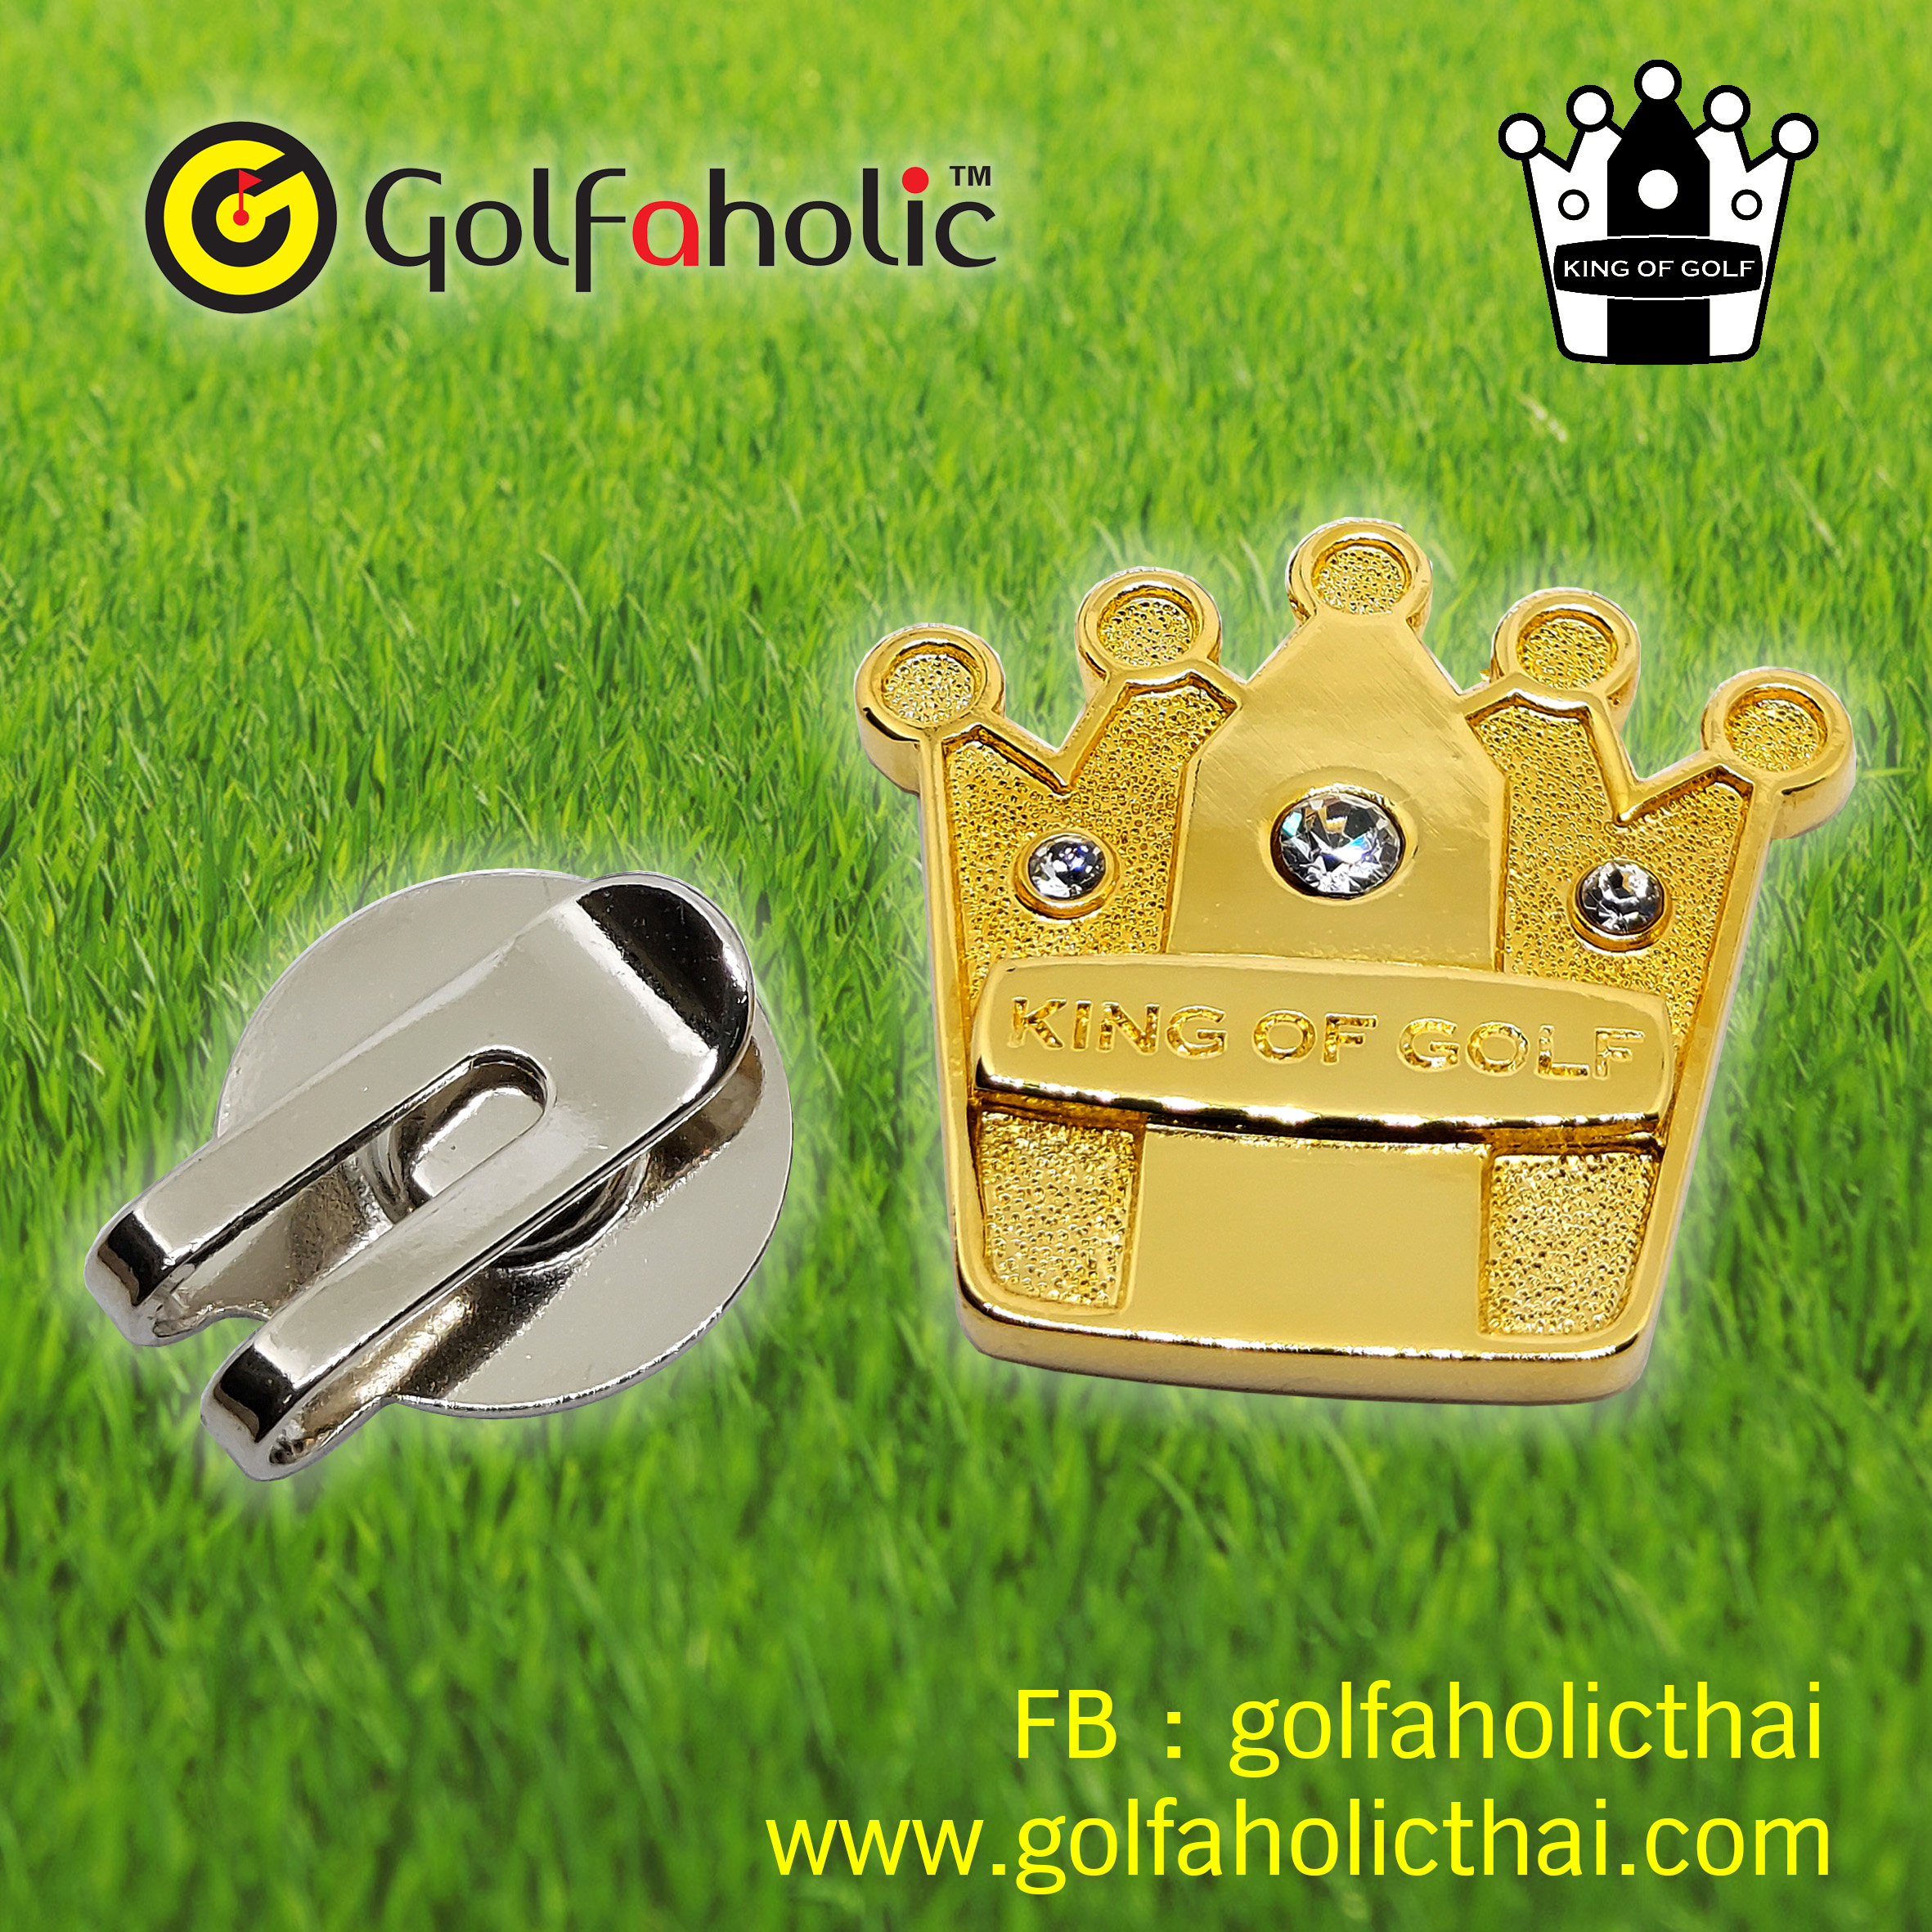 Golfaholic Ball Marker KING OF GOLF - บอลมาร์คเกอร์ กอล์ฟ KING OF GOLF ติดคริสตัล